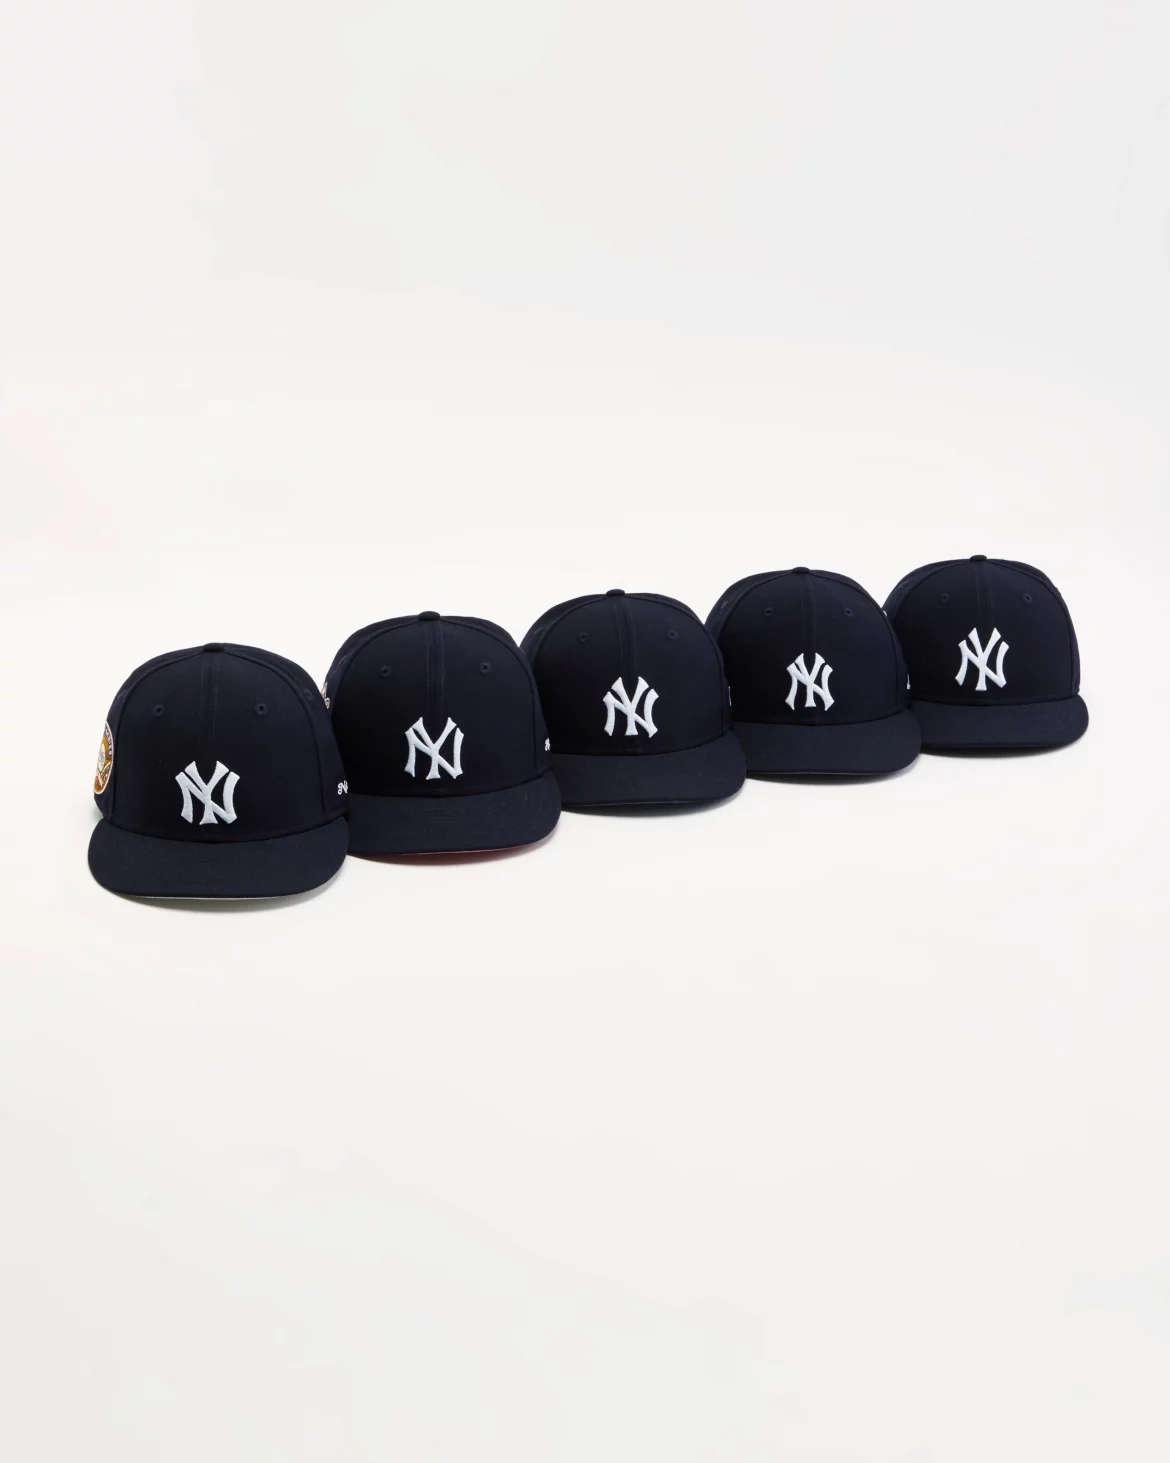 New-Era-Kith-Yankees